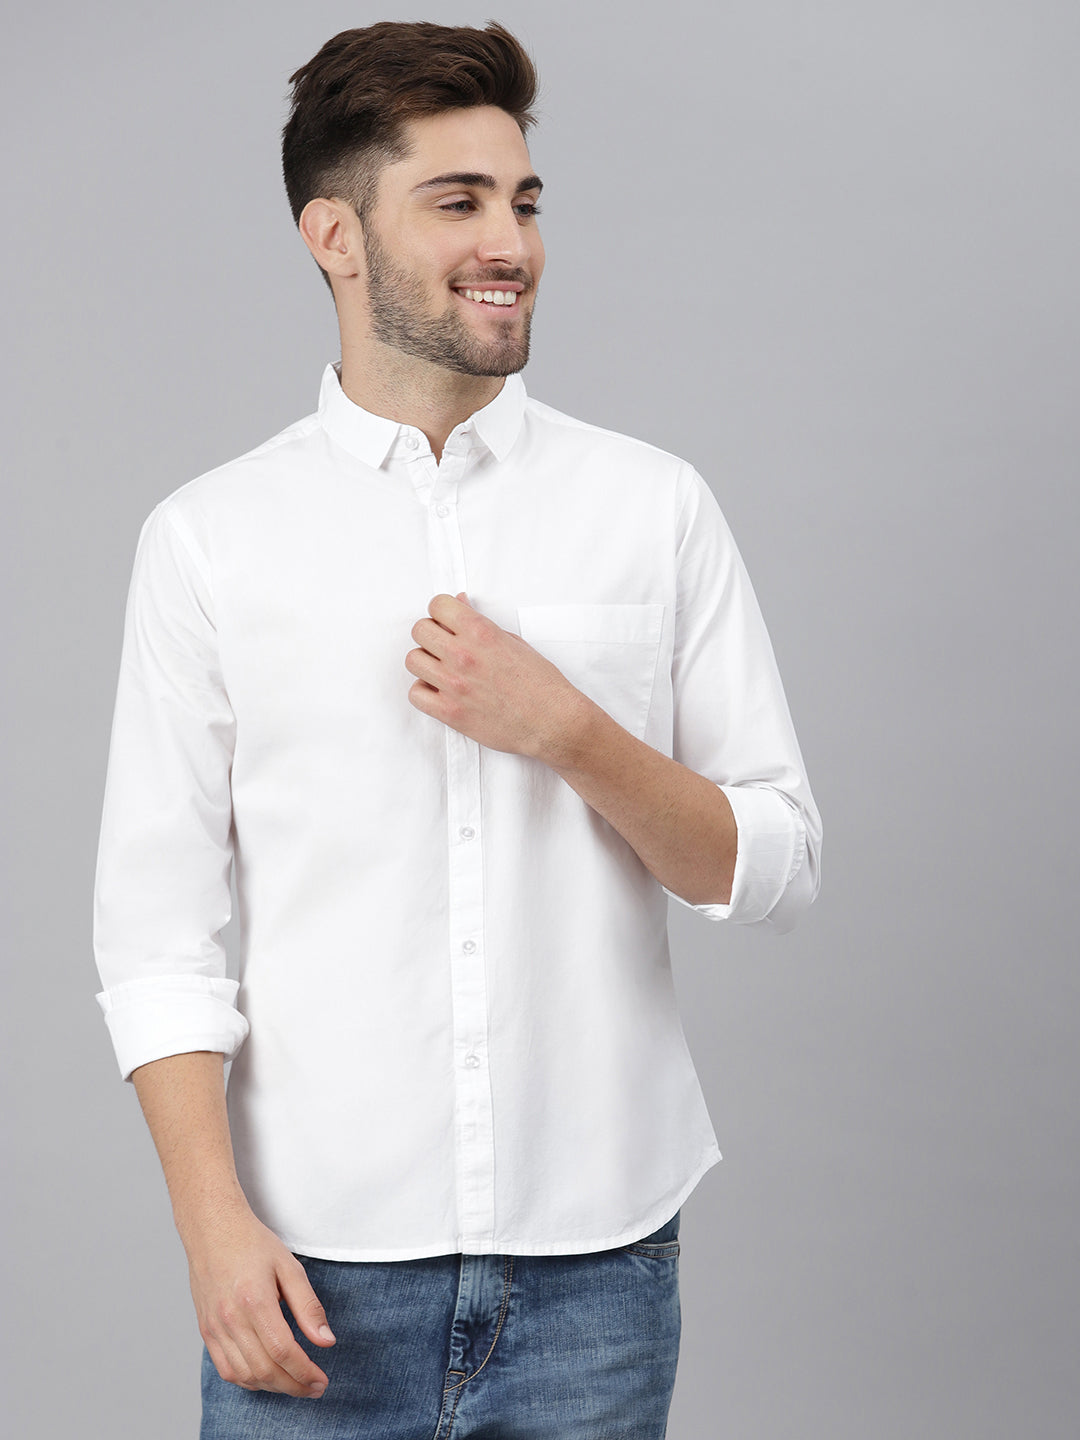 Men New Shirt High-end Sense Business Versatile Plaid Slim Fashion Casual  Party Can Be Worn Outer Base Shirt